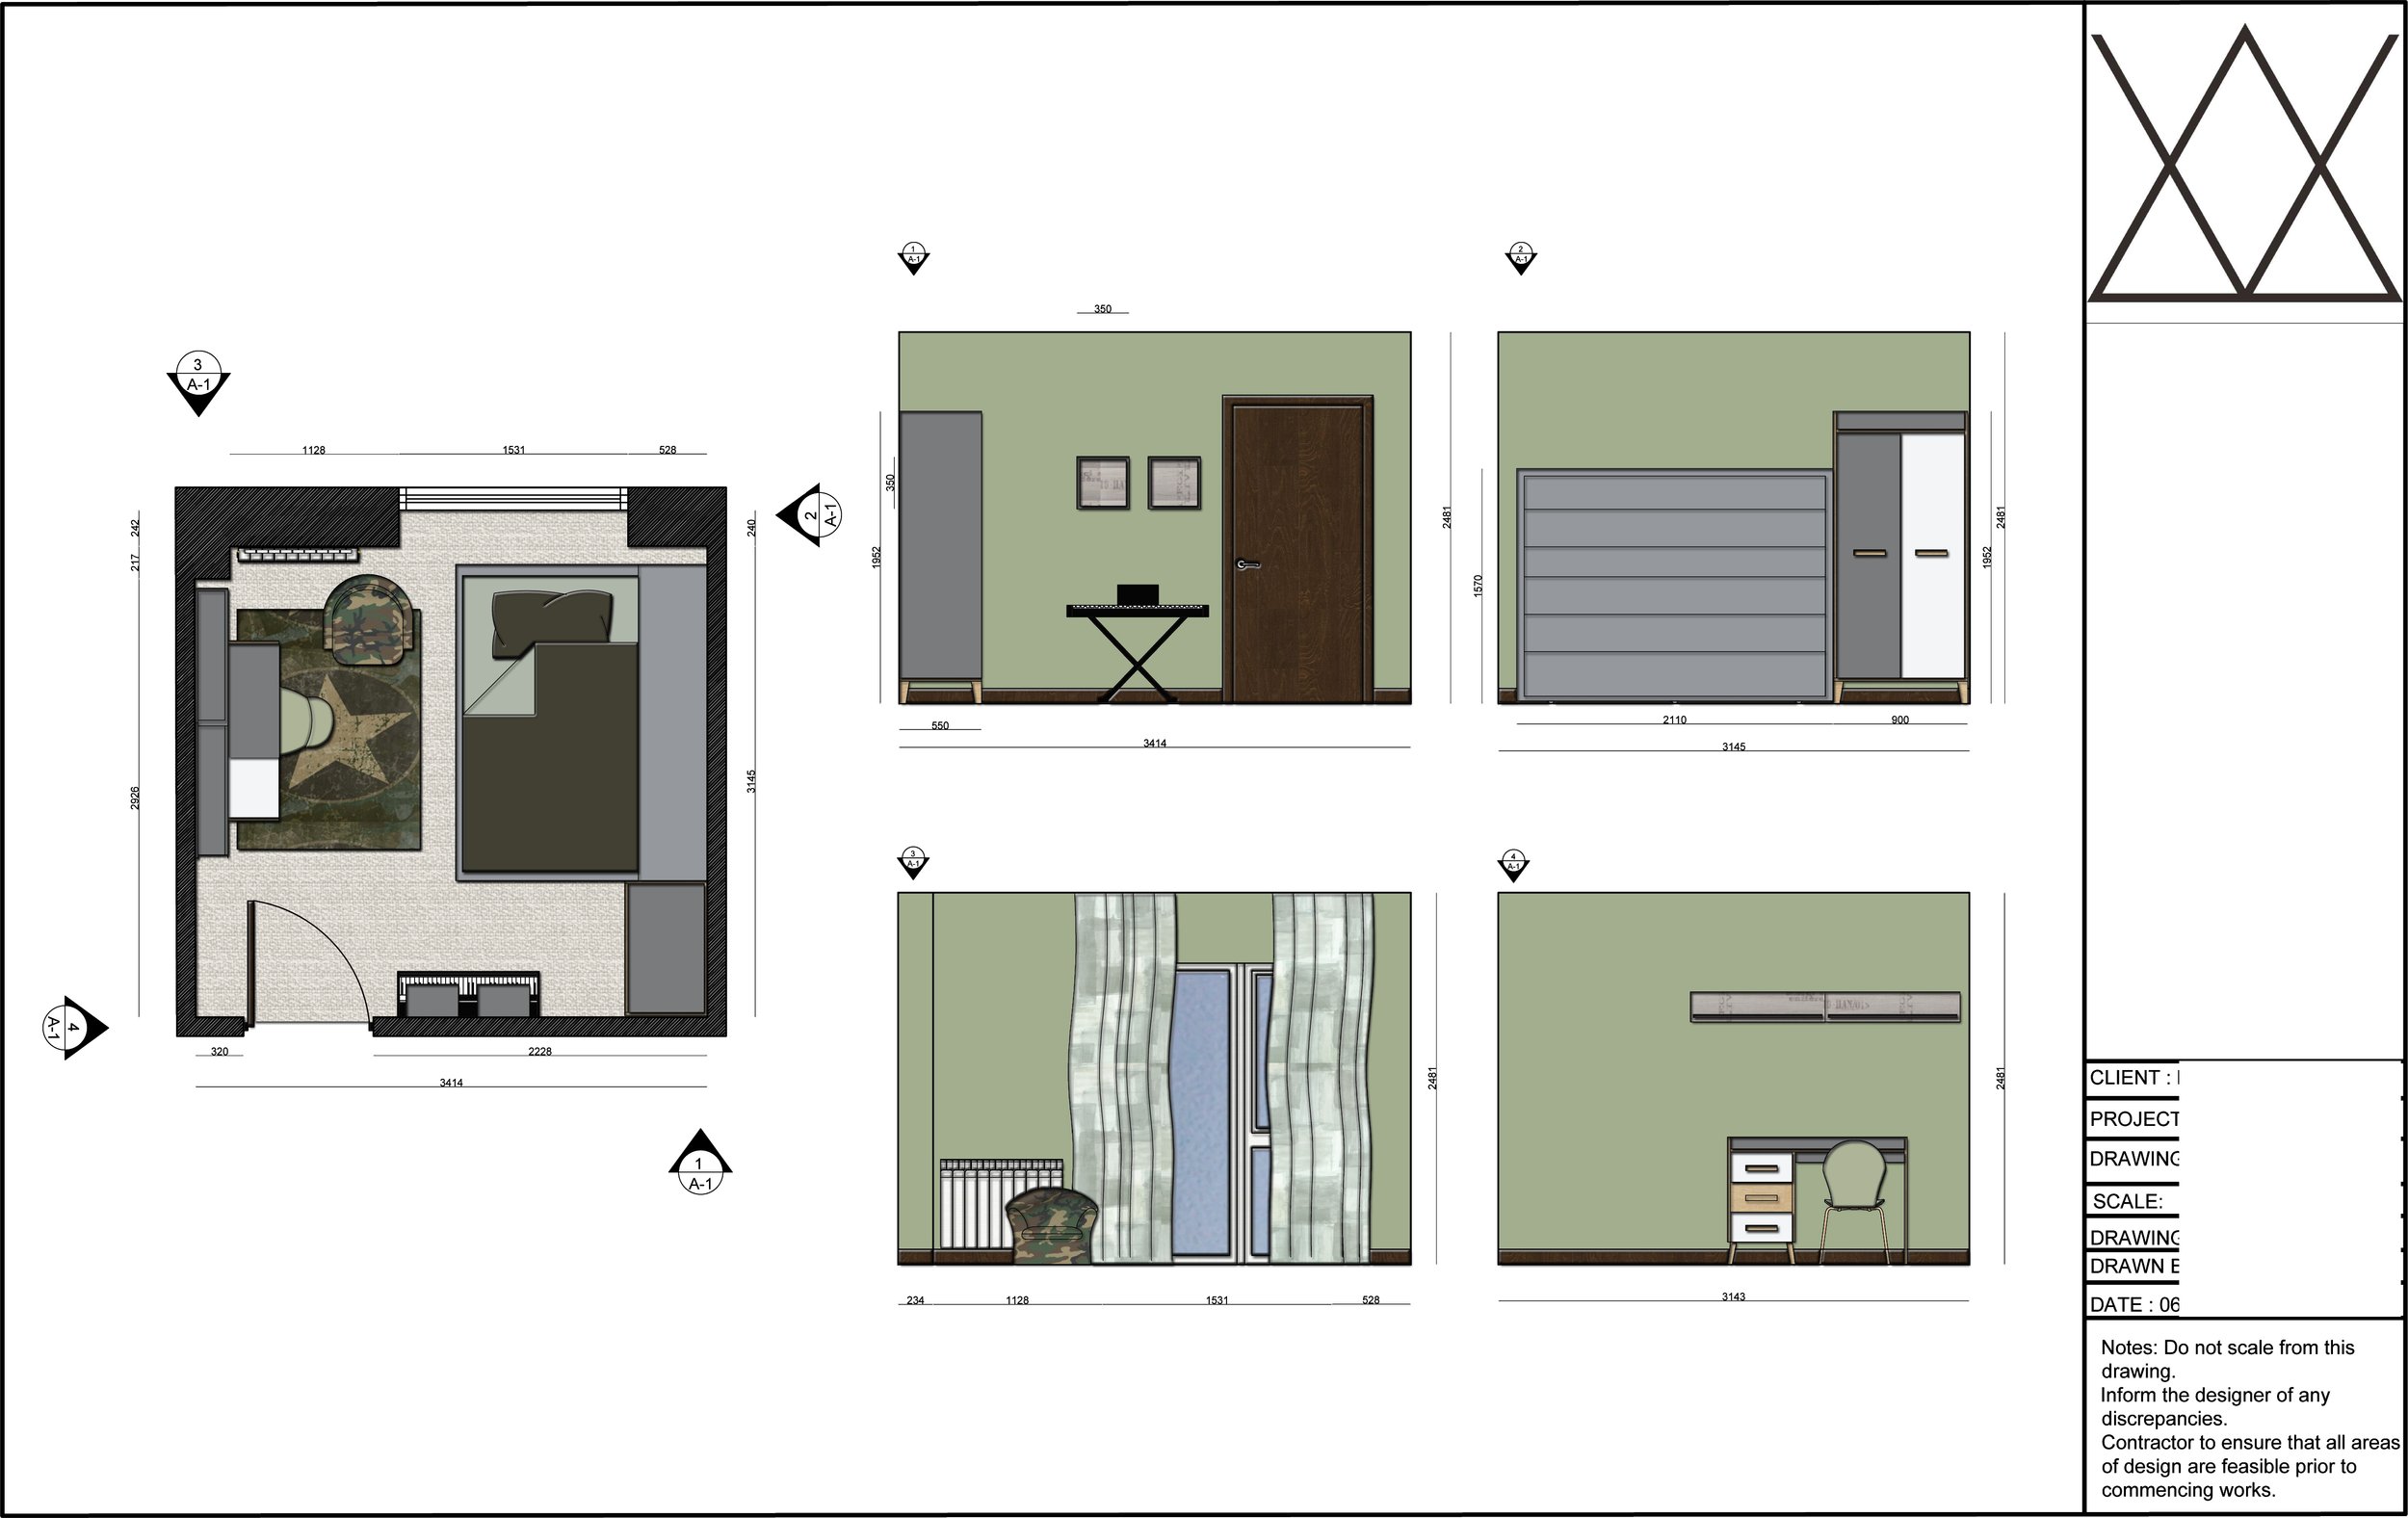 4 Doddapureddy Proposed second bedroom copy.jpg